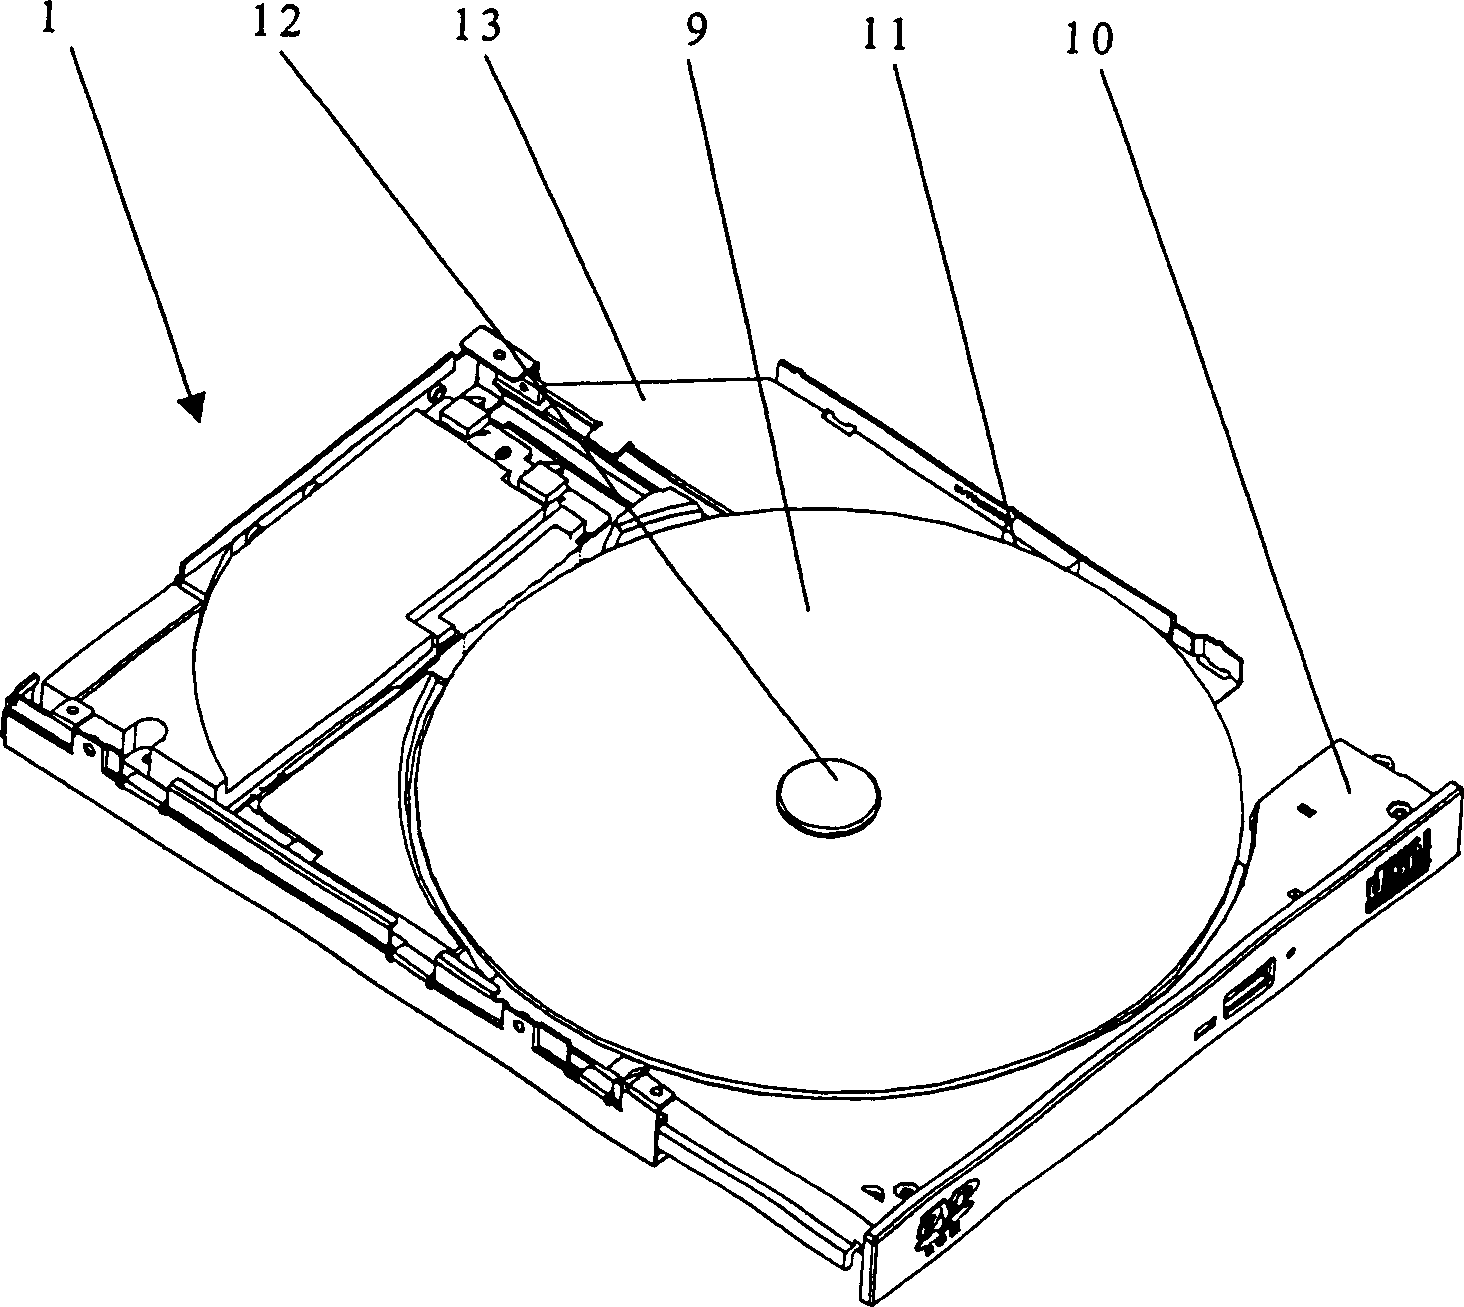 Pallet disc brake mechanism of thin disc apparatus